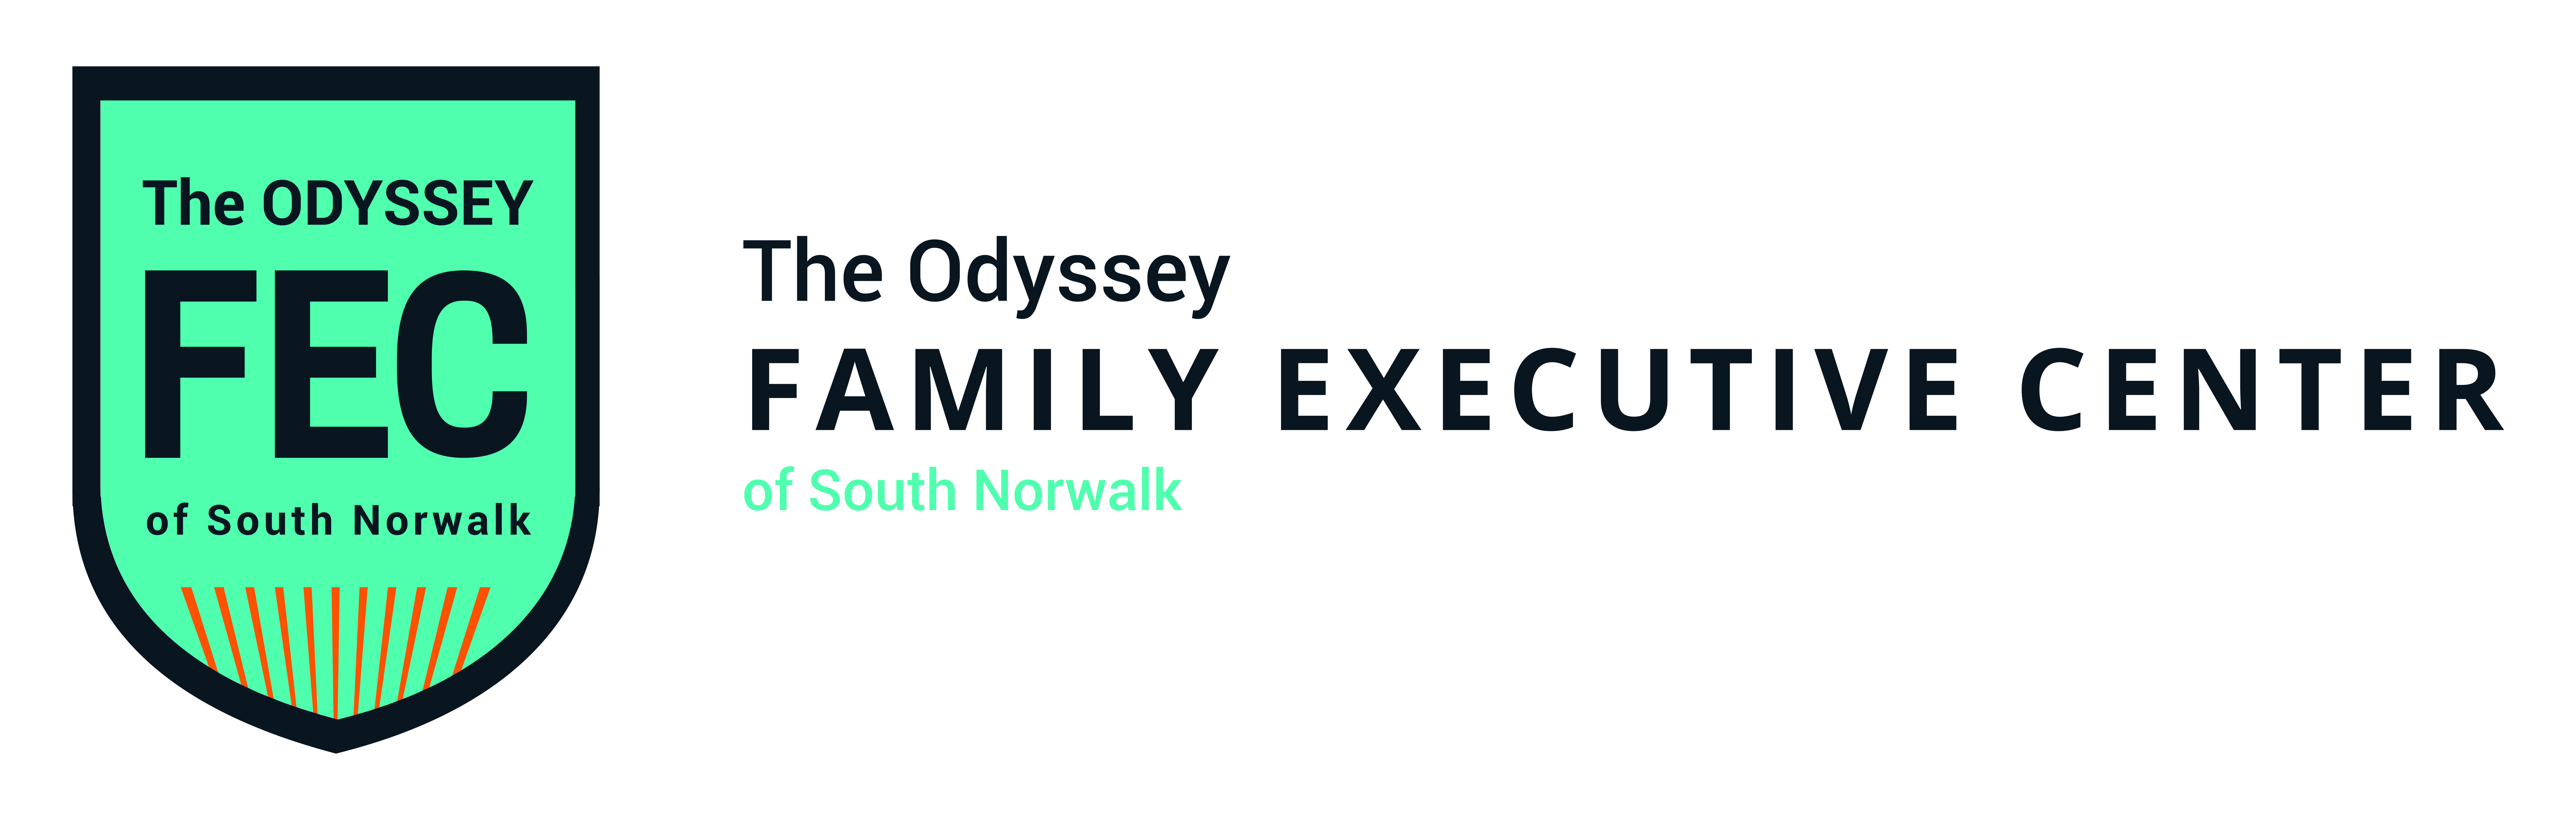 Odyssey Family Executive Center